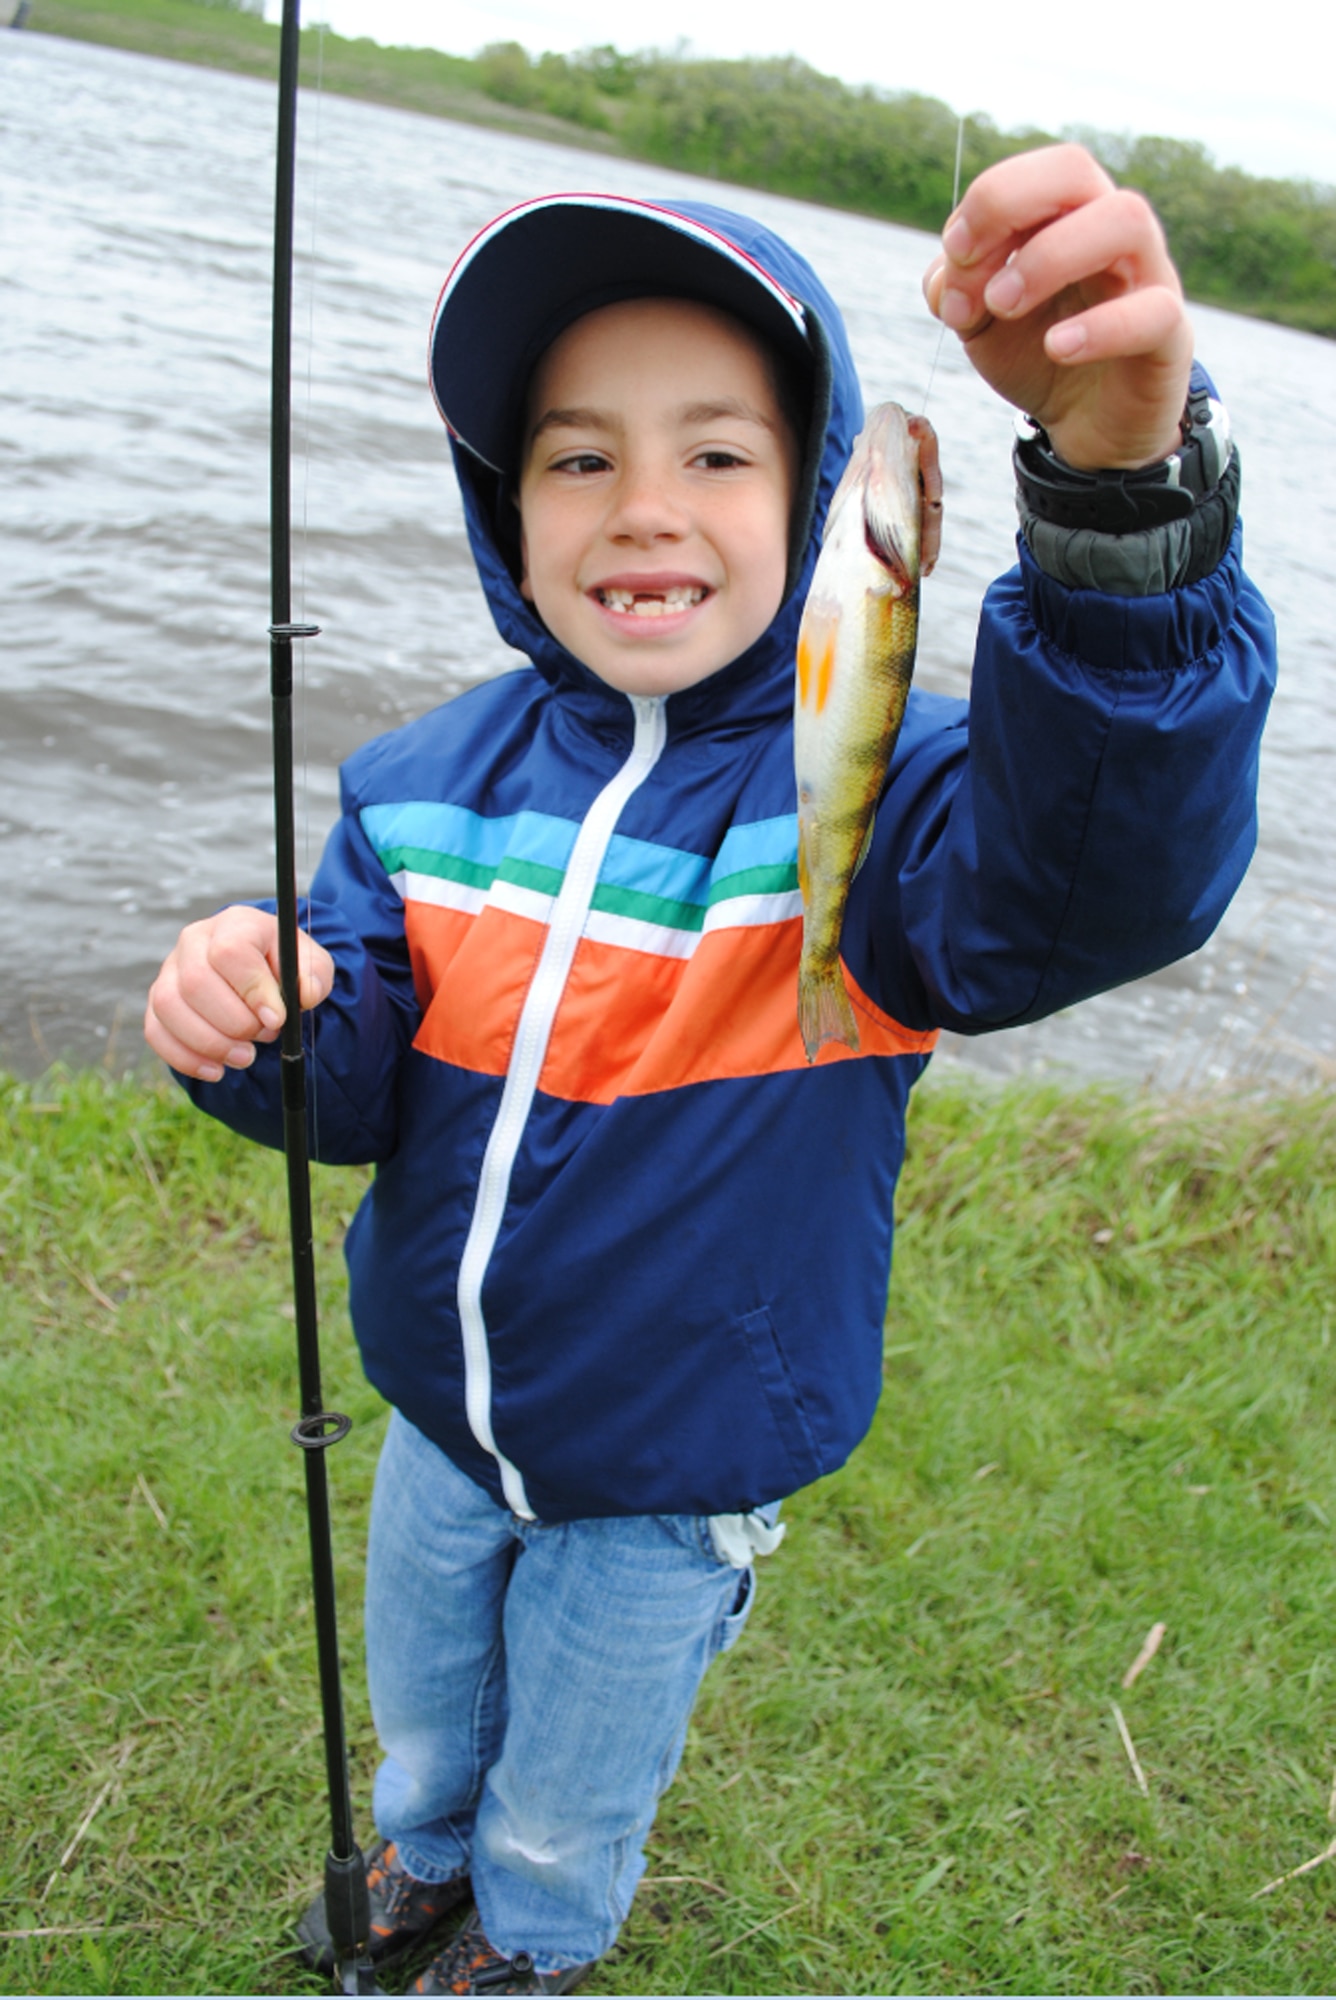 High-Performance Kids Fishing Gear: No Kidding Around